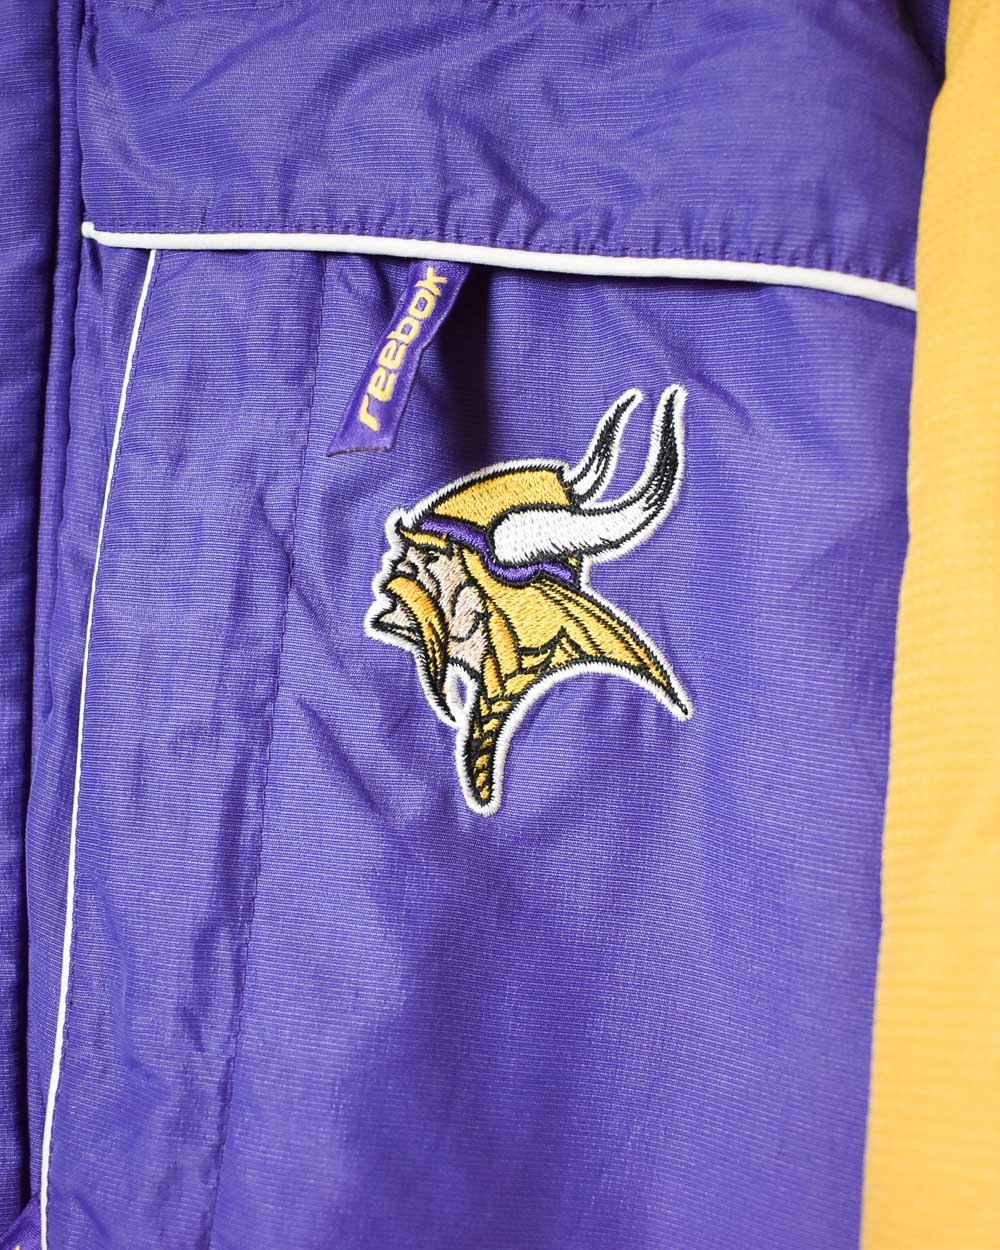 Purple Reebok Minnesota Vikings Long Jacket - X-Large